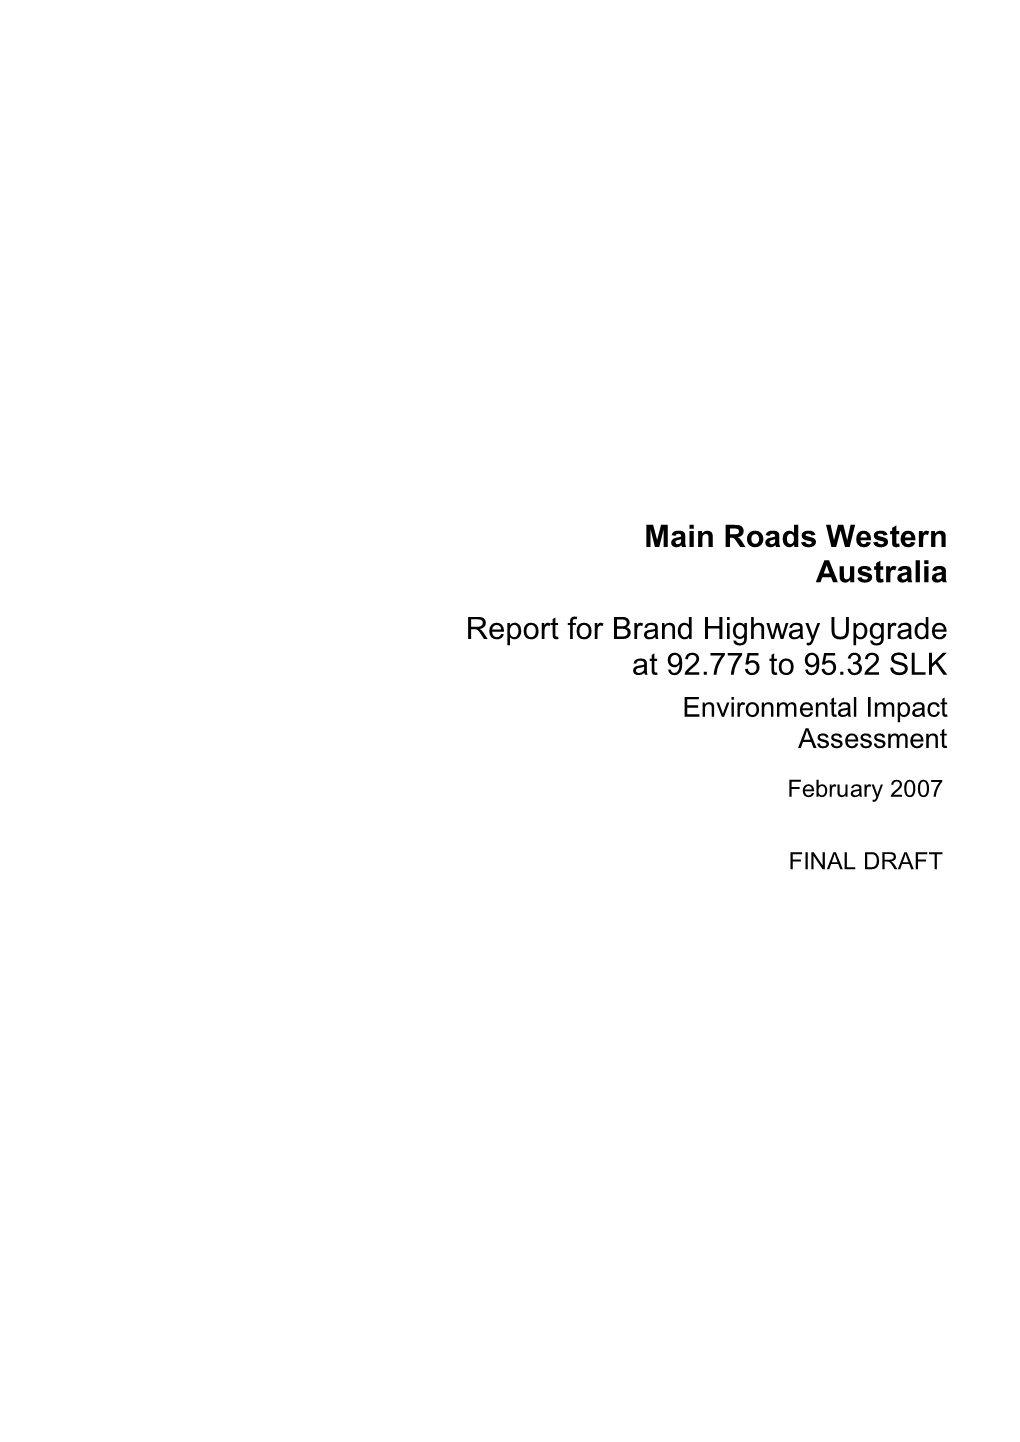 Main Roads Western Australia Report for Brand Highway Upgrade at 92.775 to 95.32 SLK Environmental Impact Assessment